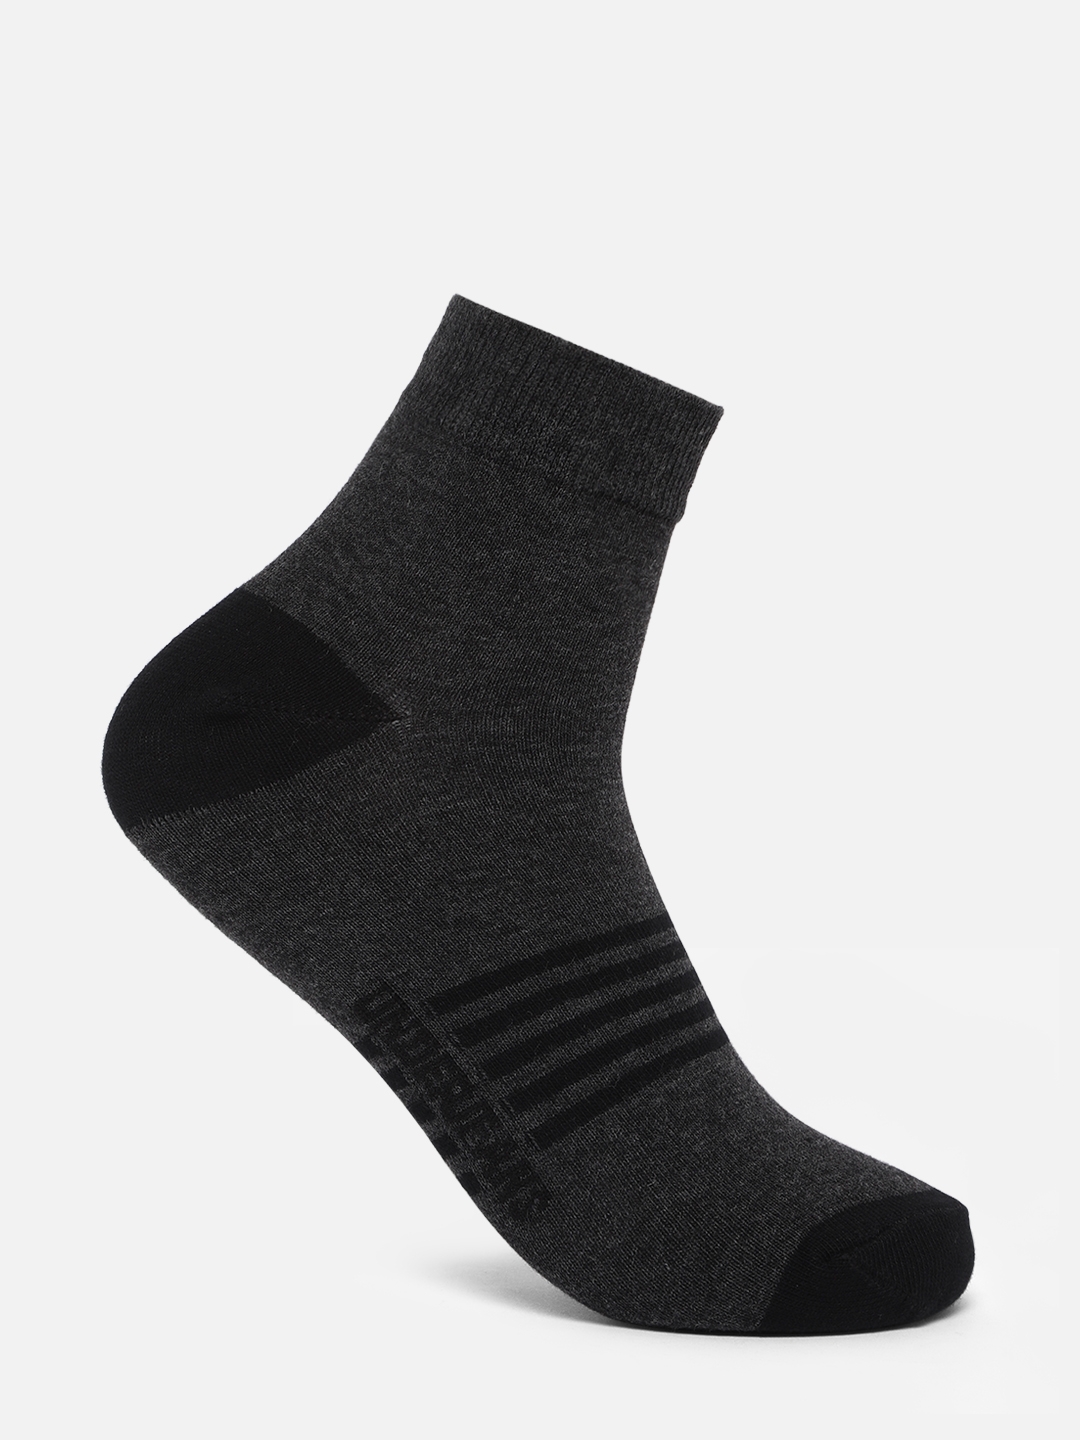 spykar | Underjeans Men Assorted Ankle length (Non terry) Socks Pack of 2 2